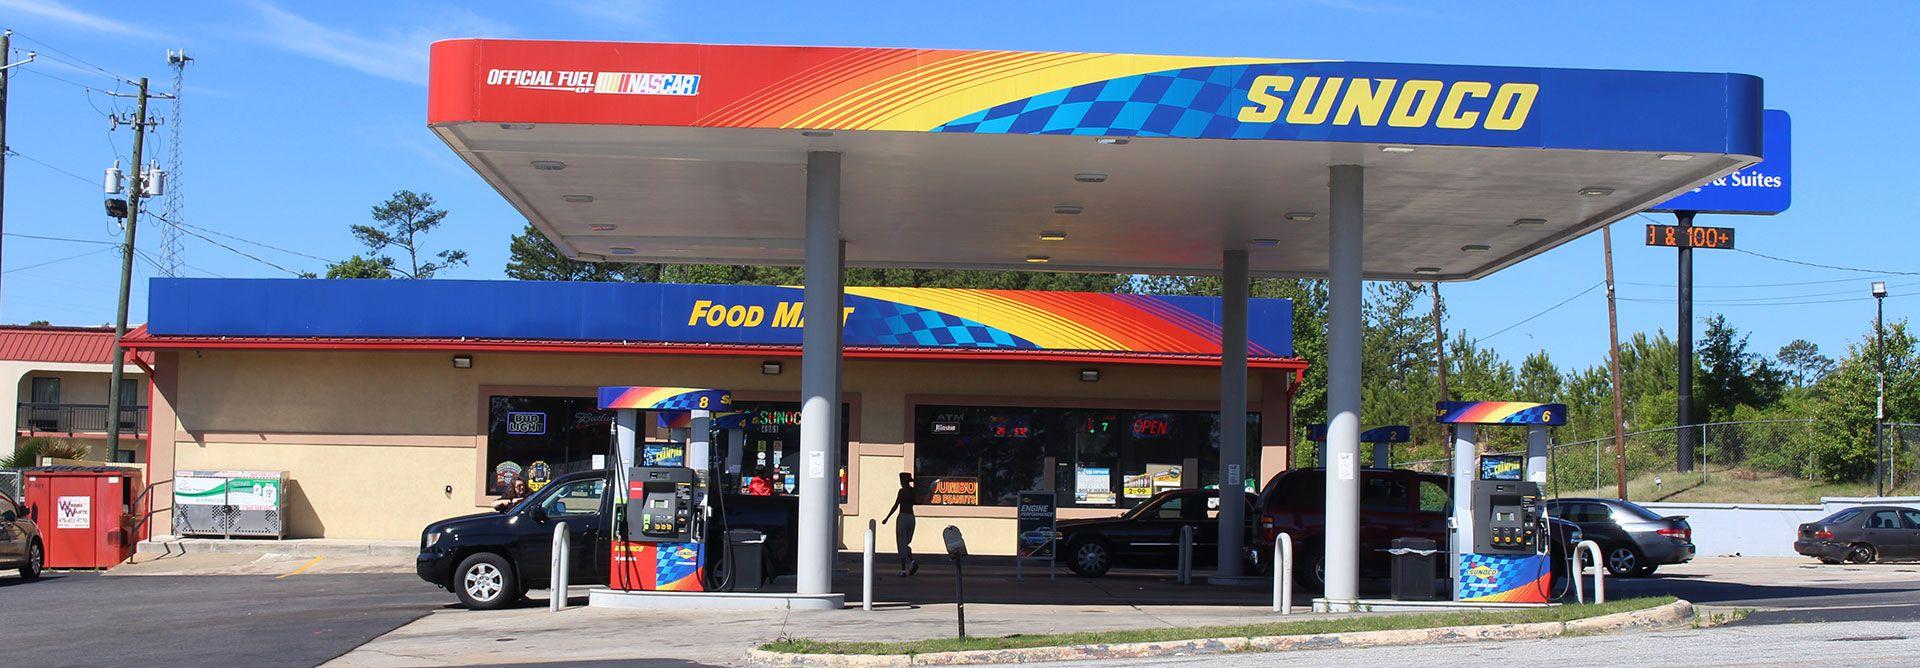 Sunoco Gas Station Logo - 7-Eleven, Sunoco Say Deal on Track